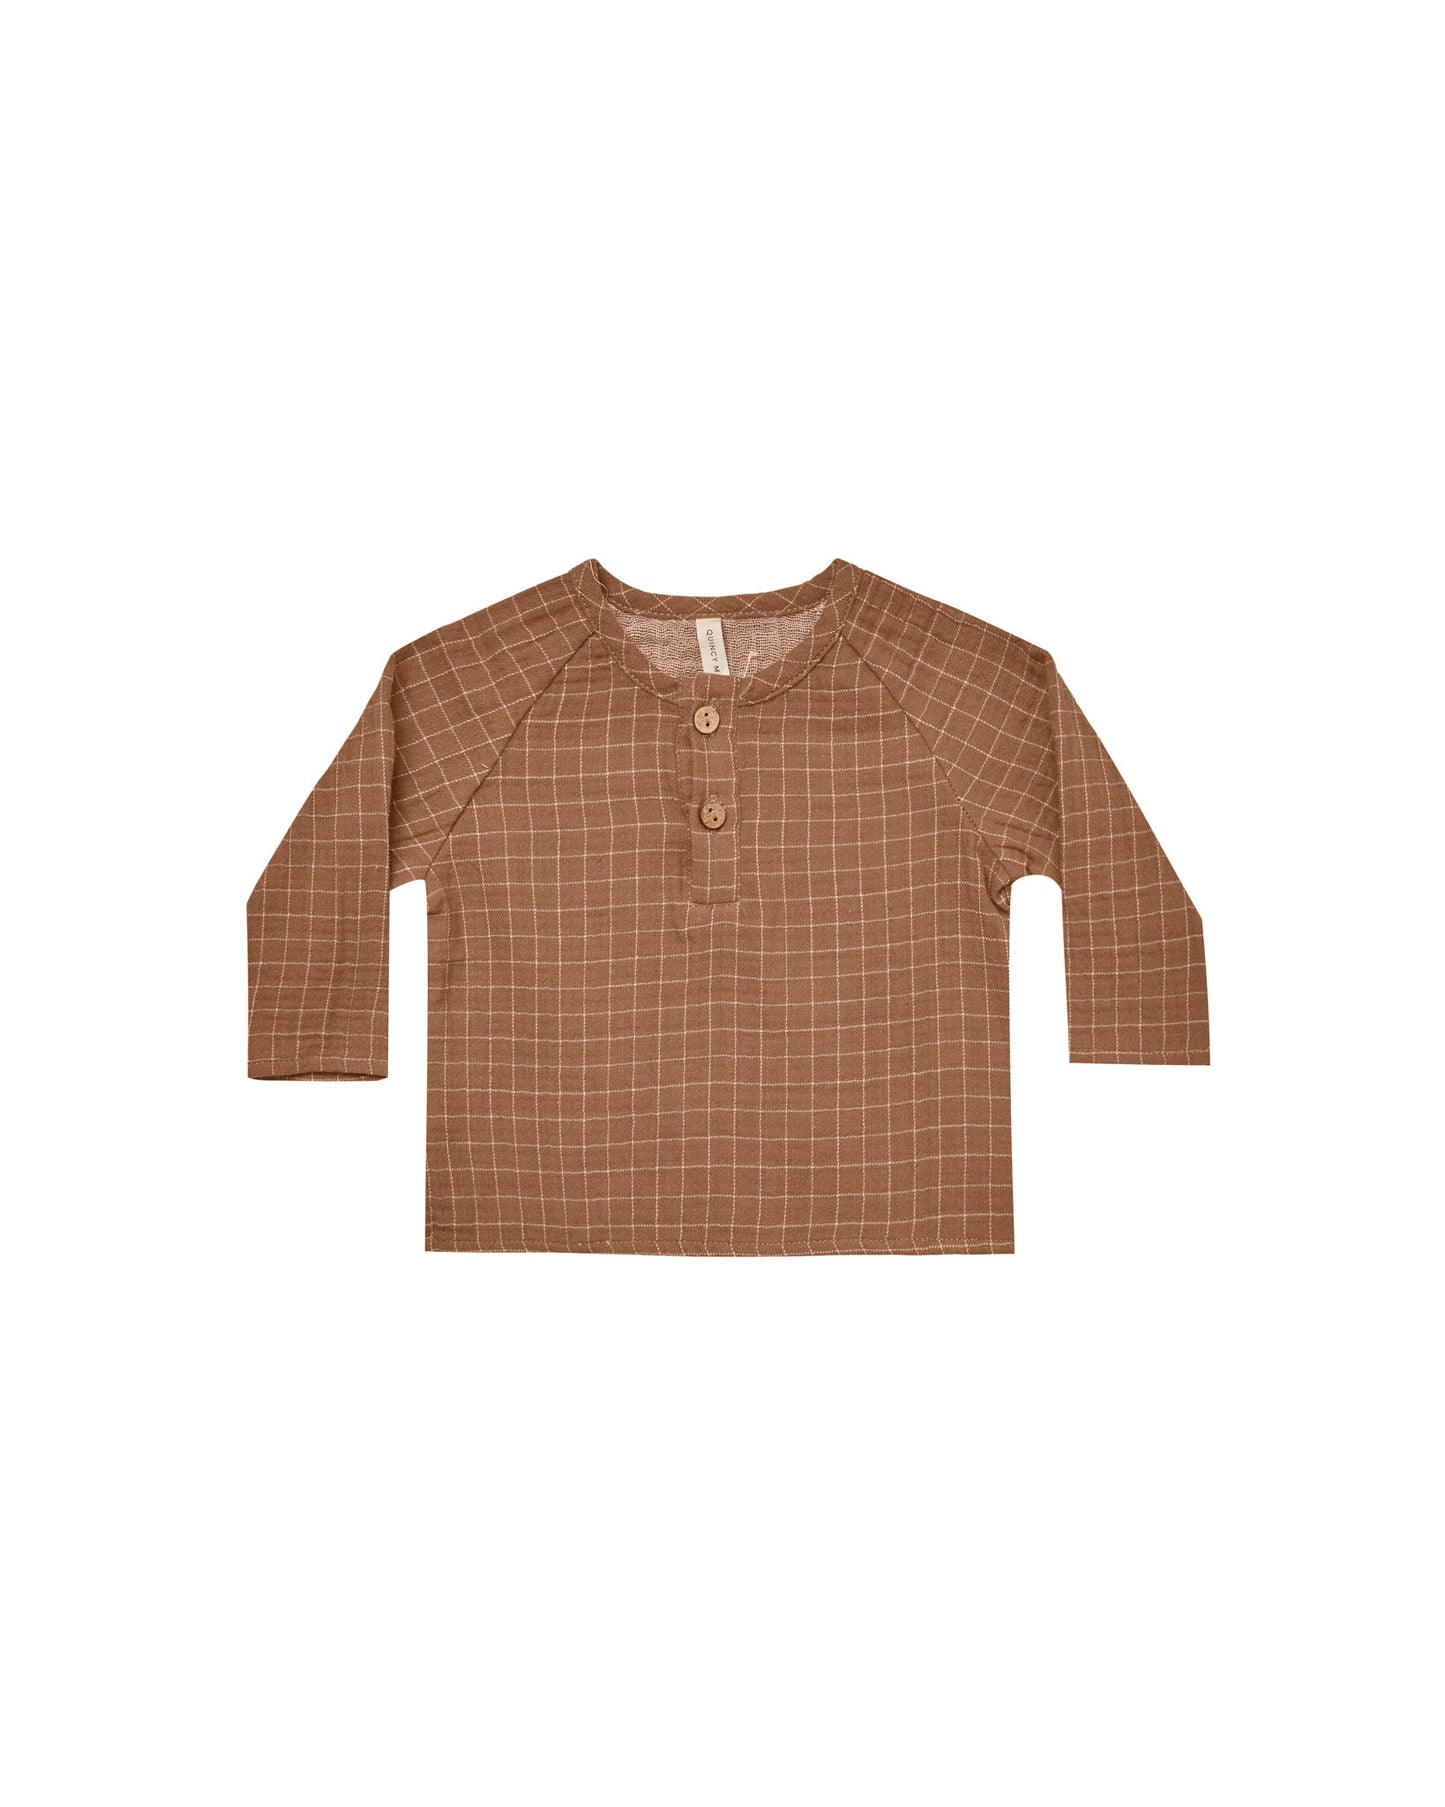 Zion Shirt in Cinnamon Grid